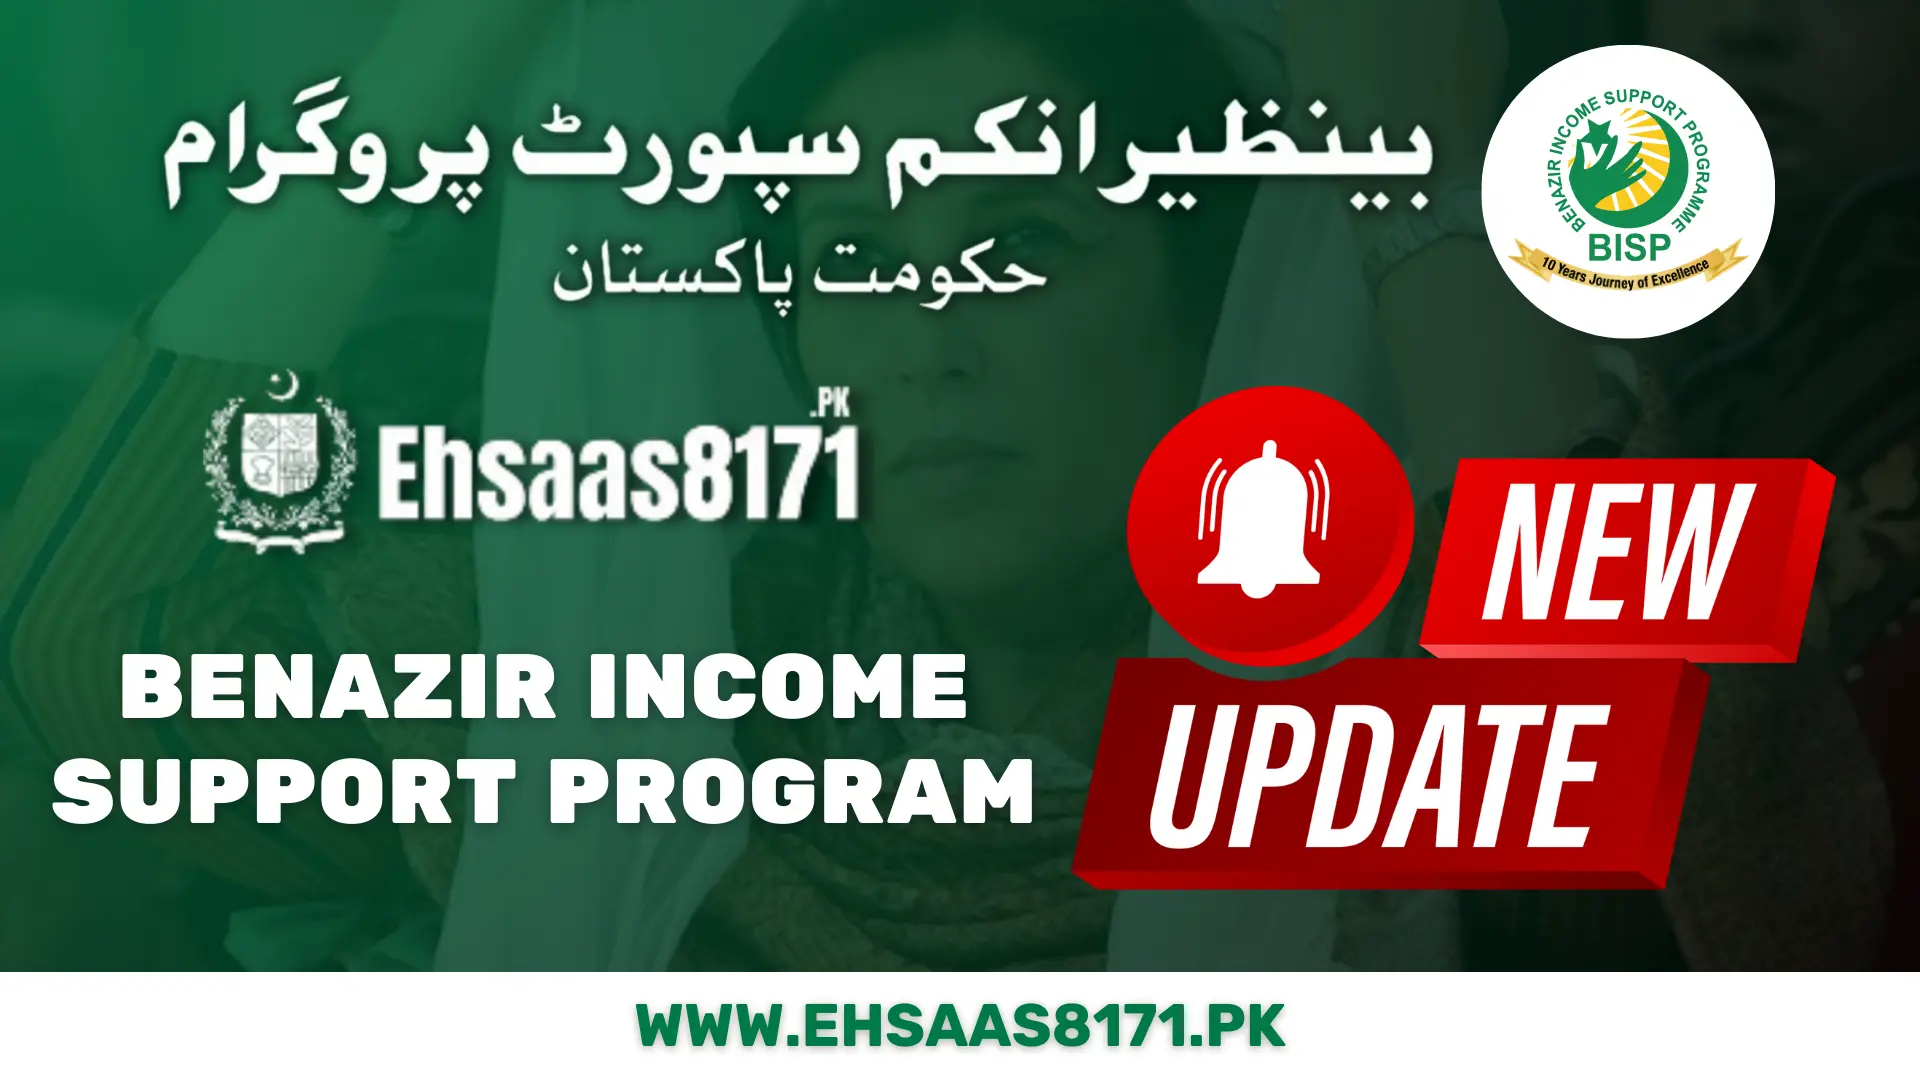 Benazir Income Support Program New Update